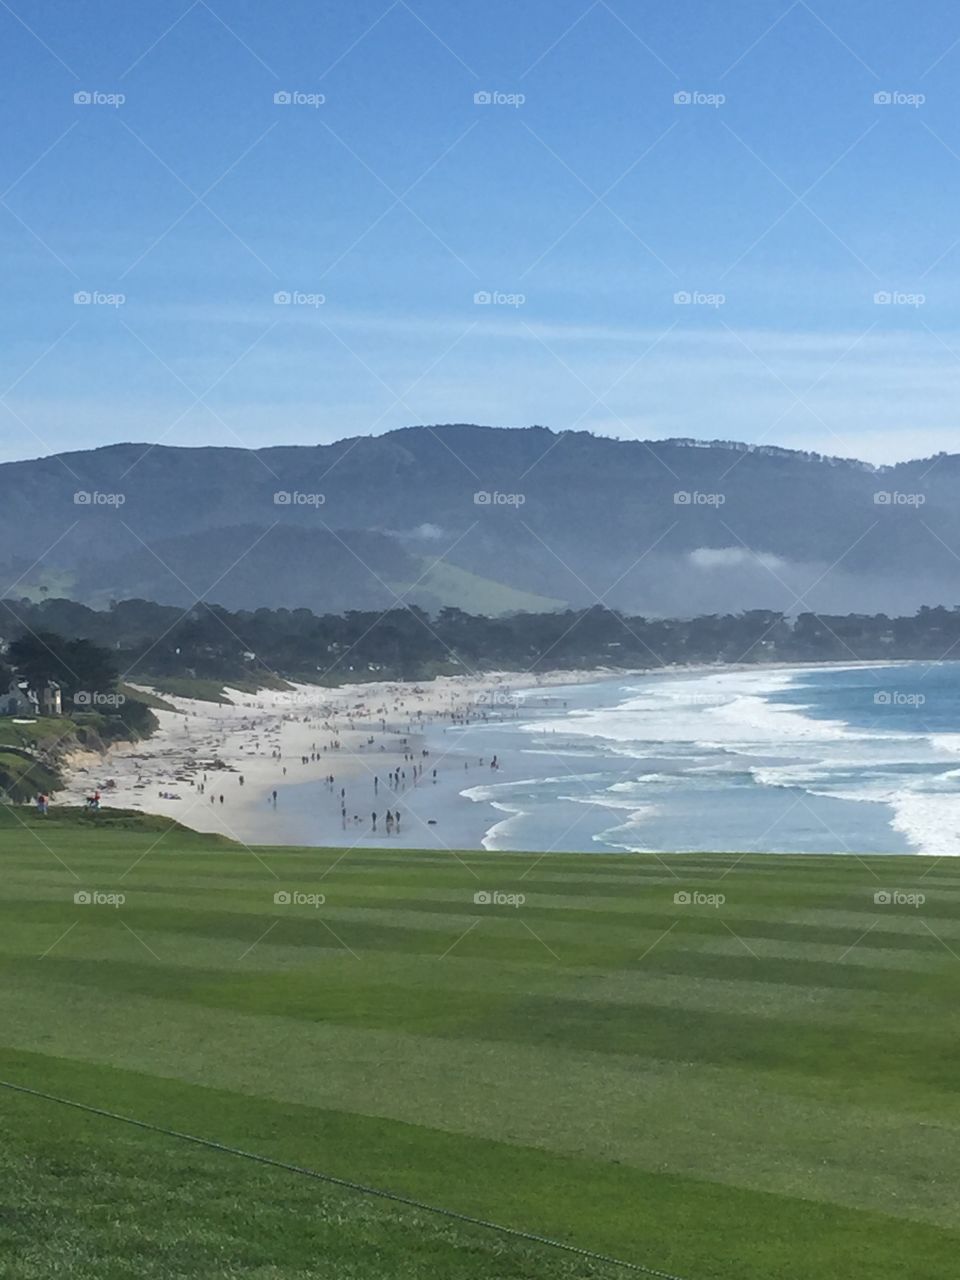 Pebble Beach Golf Course. Pebble Beach in Carmel by the Sea California 